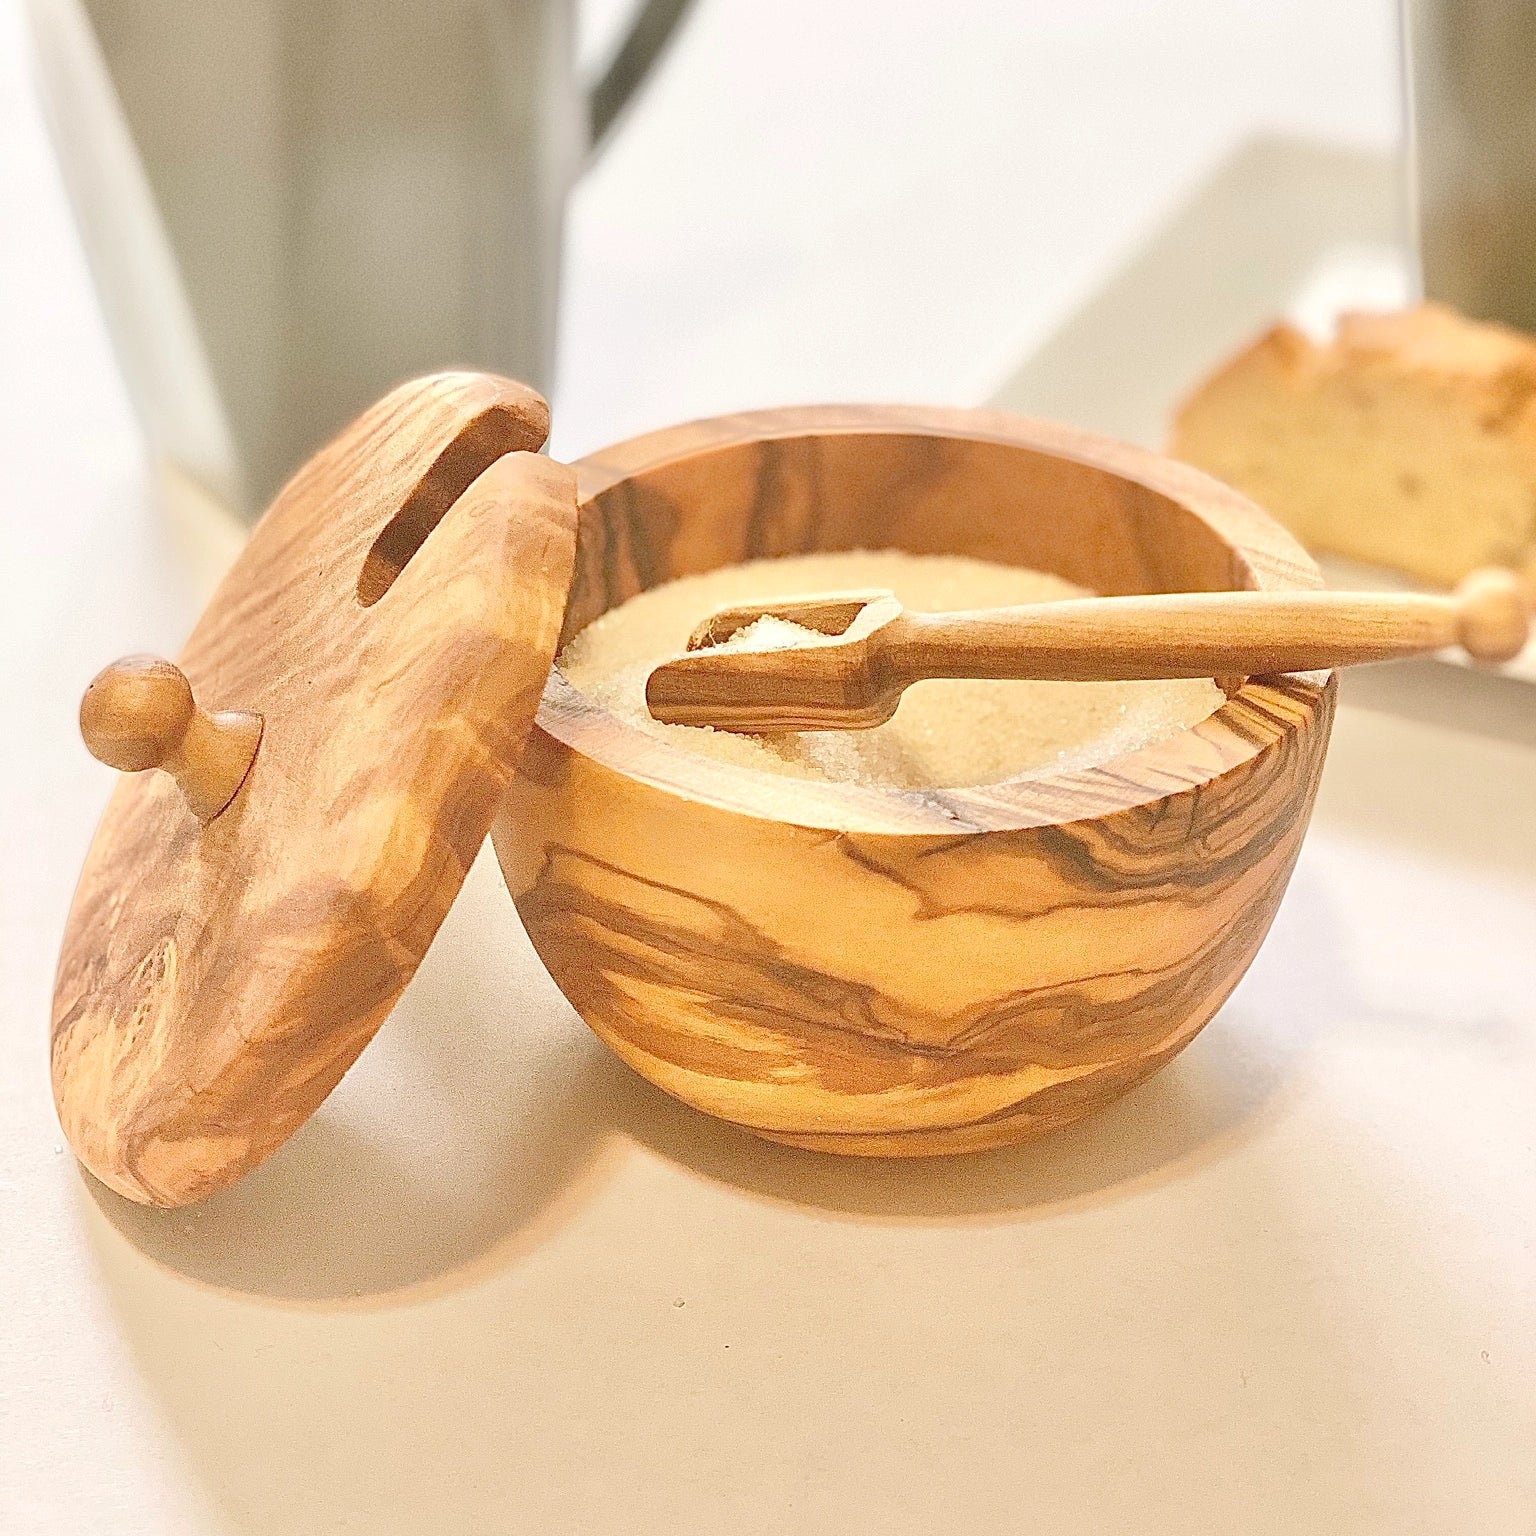 Olive Wood Salt/Sugar Bowl with Scoop